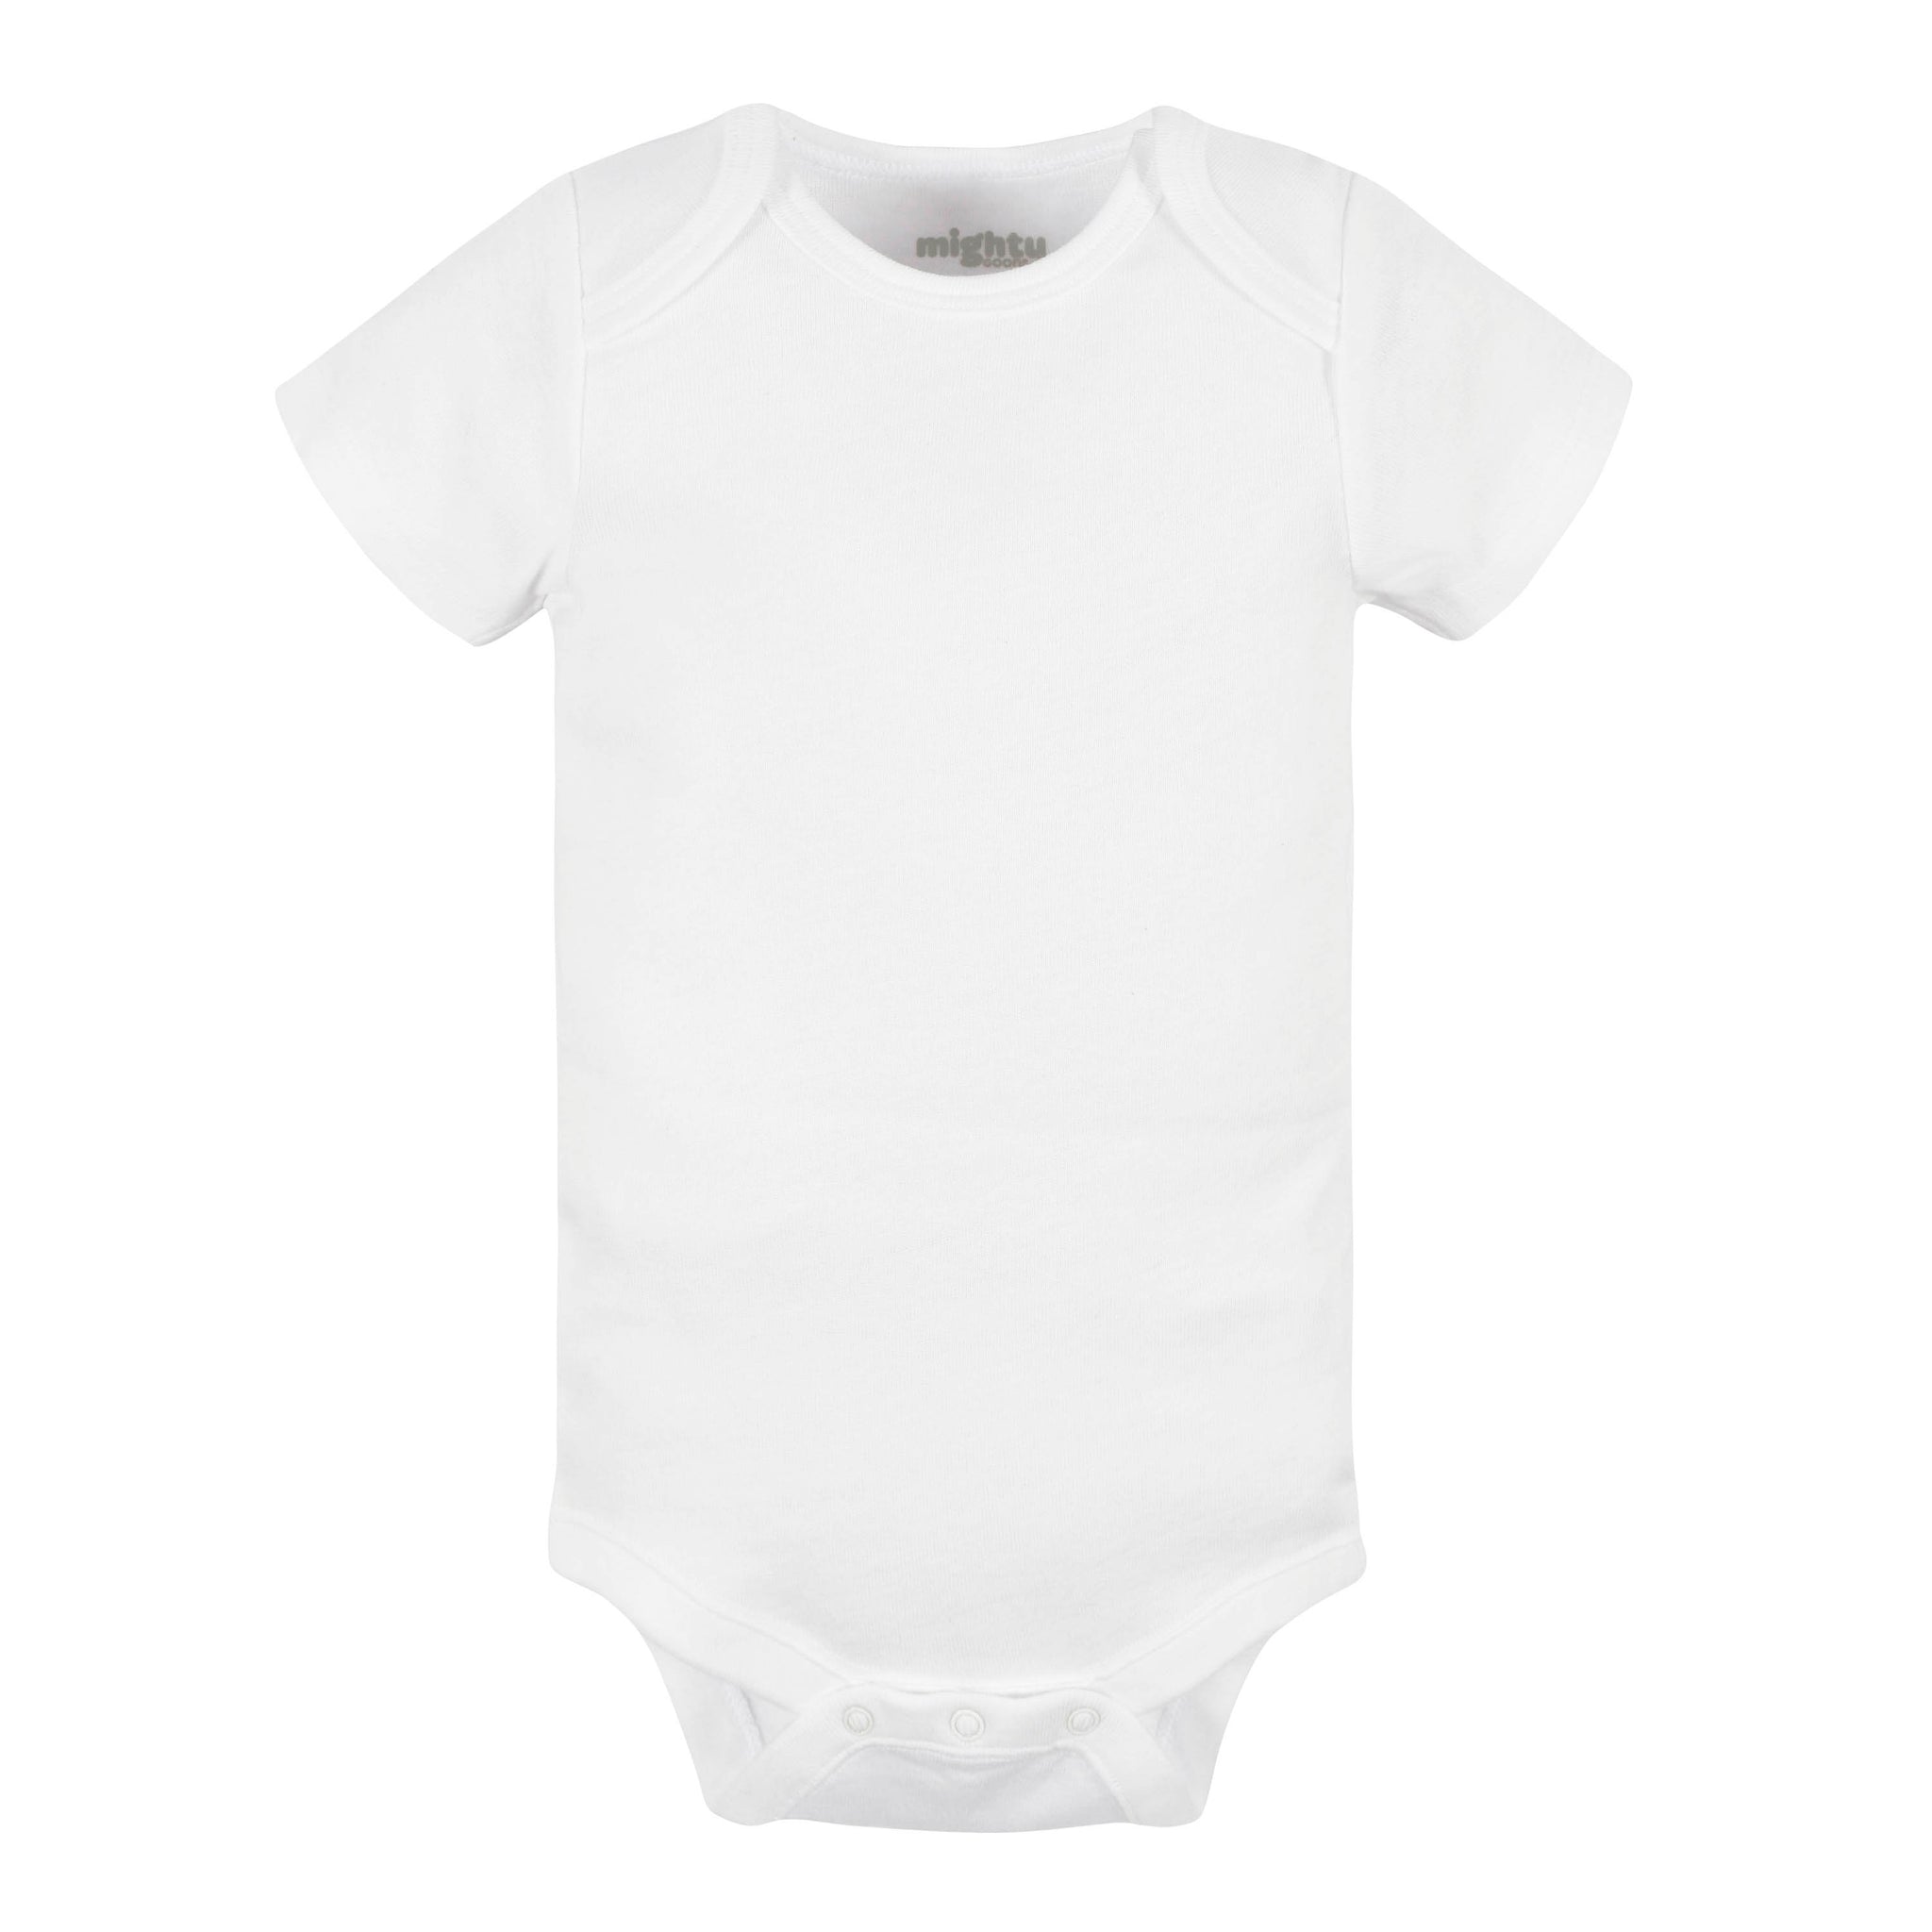 5-Pack Baby Neutral White Short Sleeve Bodysuits-Gerber Childrenswear Wholesale